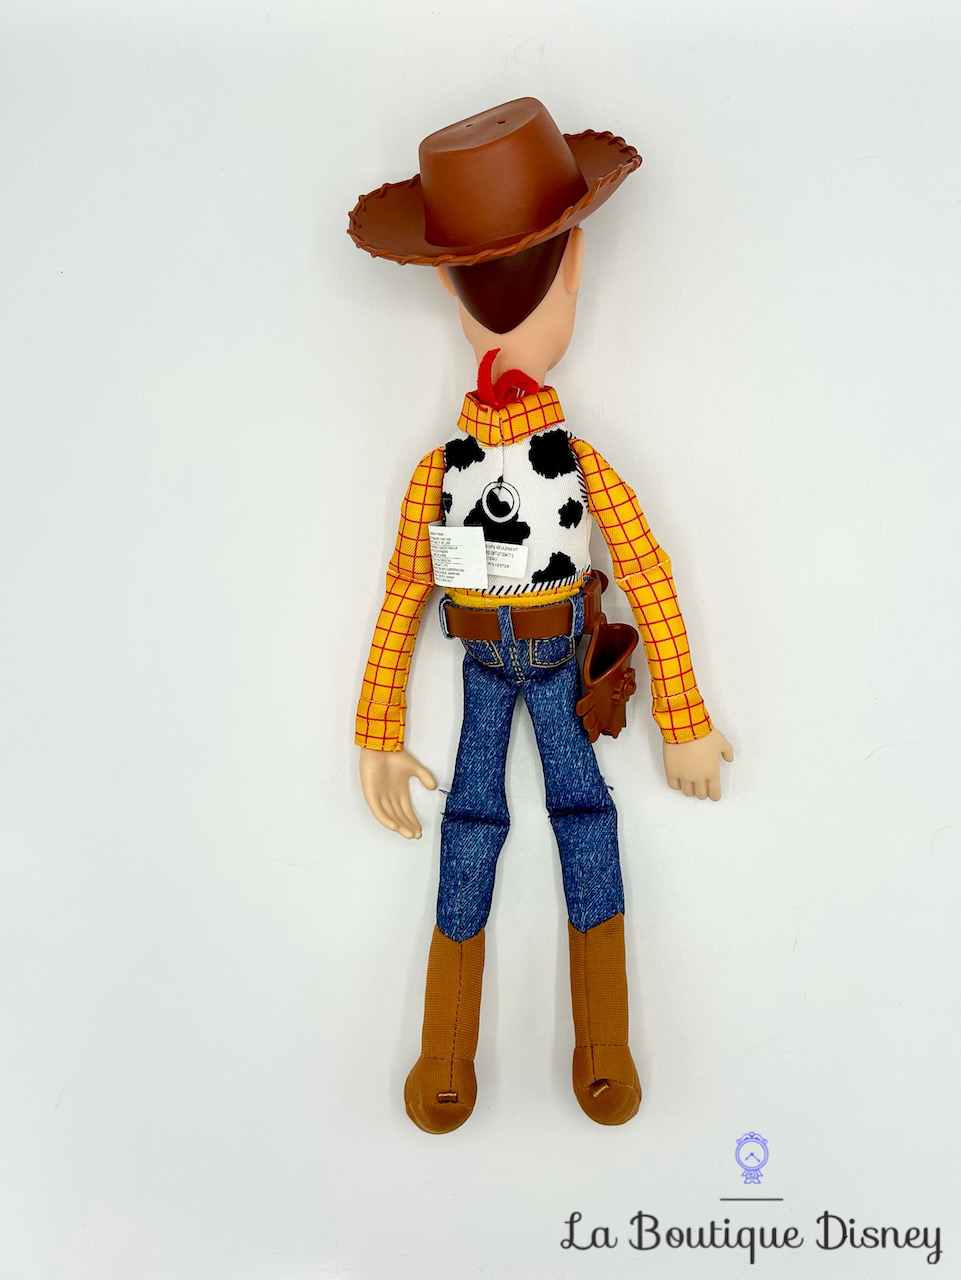 Figurine parlante Woody Toy Story 4 Disney Pixar Lansay Thinkway Toys 40 cm